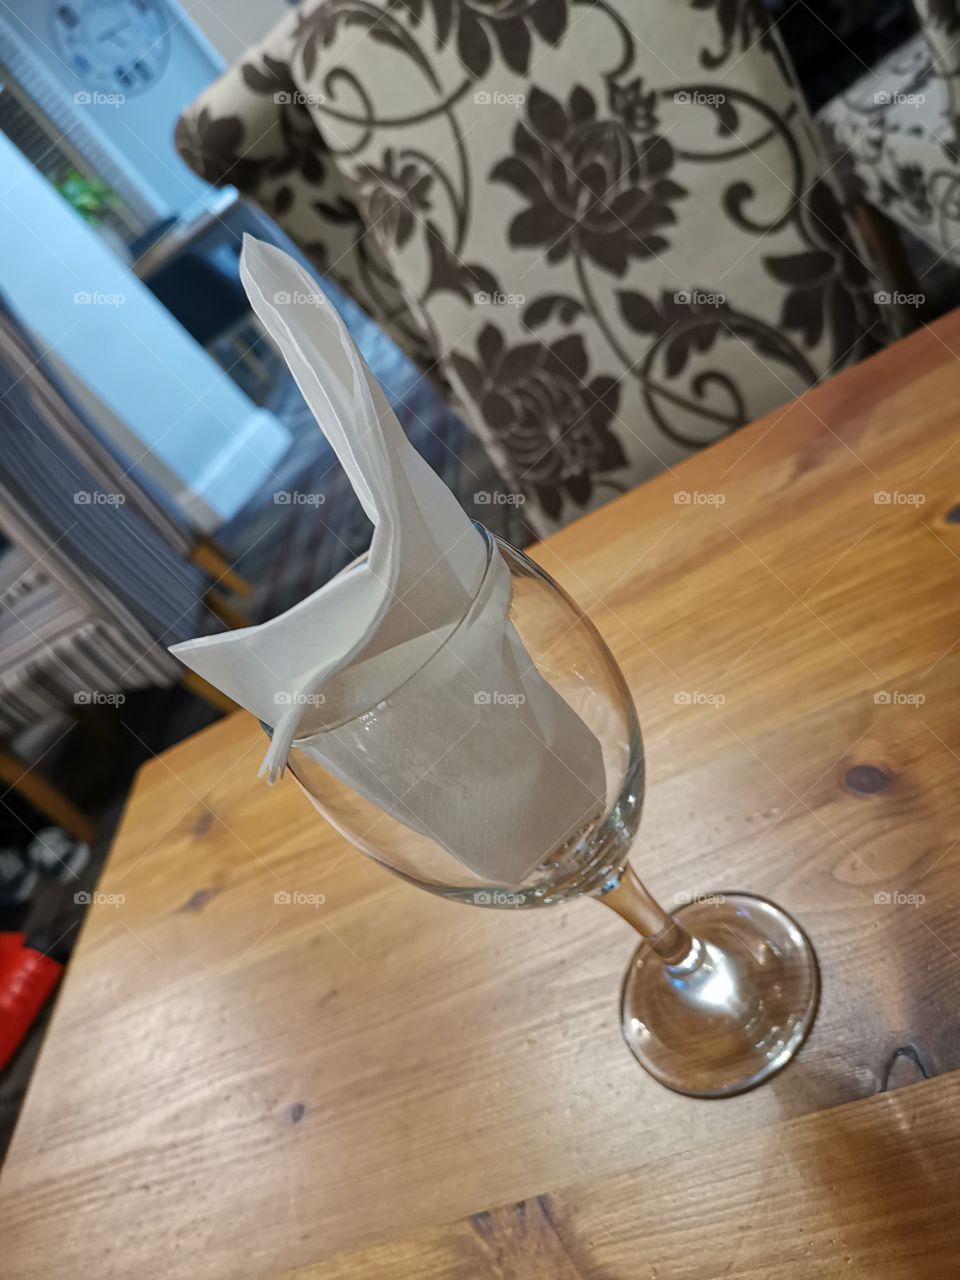 Glass of wine anyone?